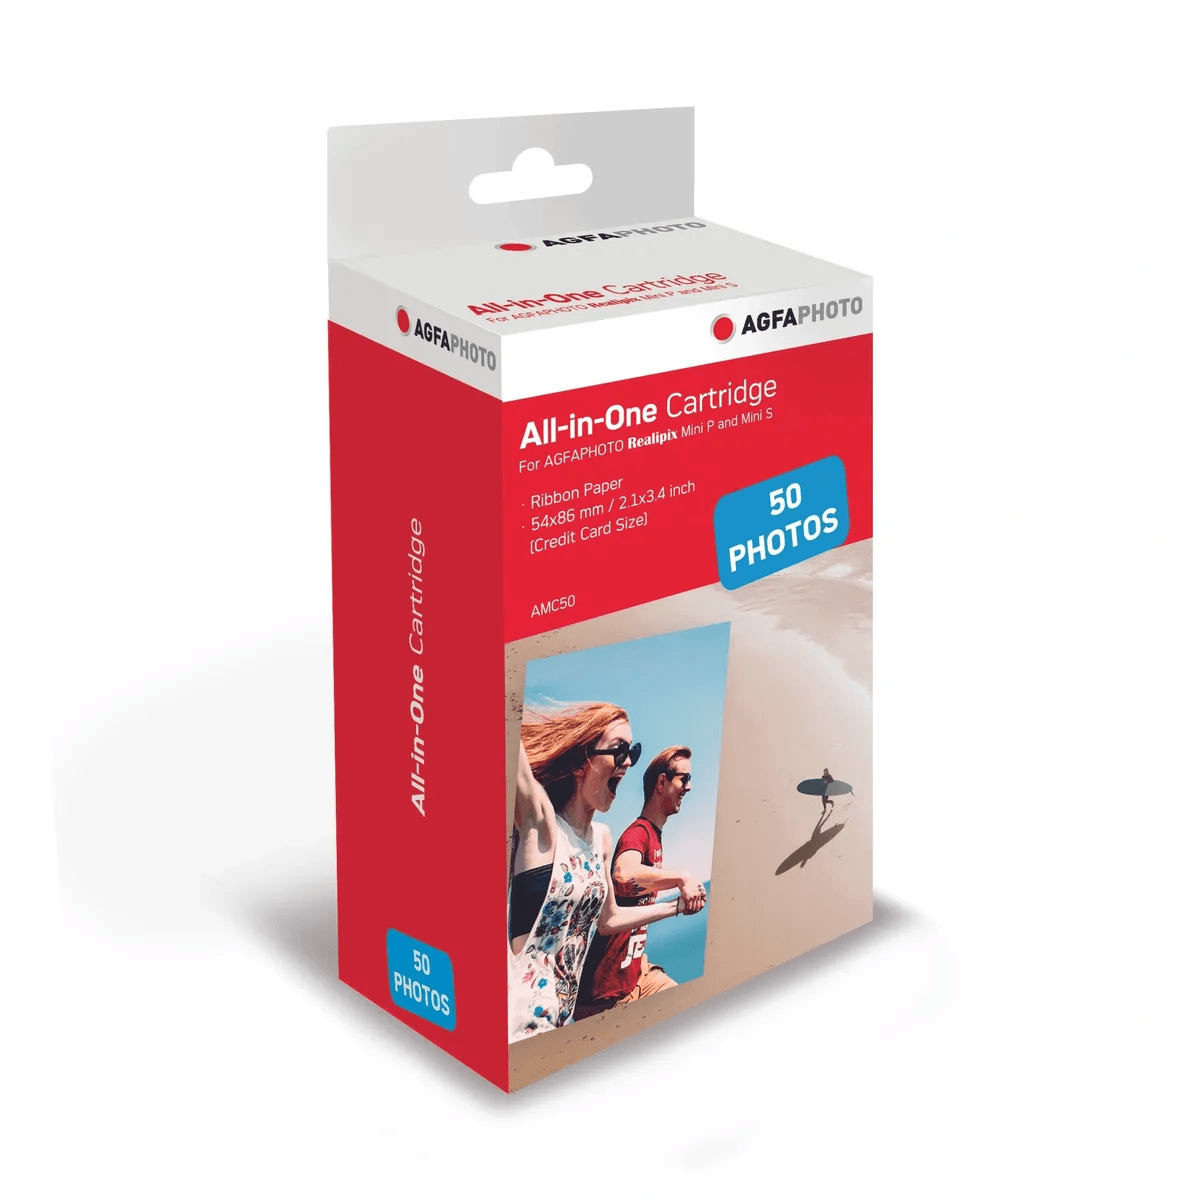 amc50 agfaphoto cartridge for mini p and mini s refill 50 pack